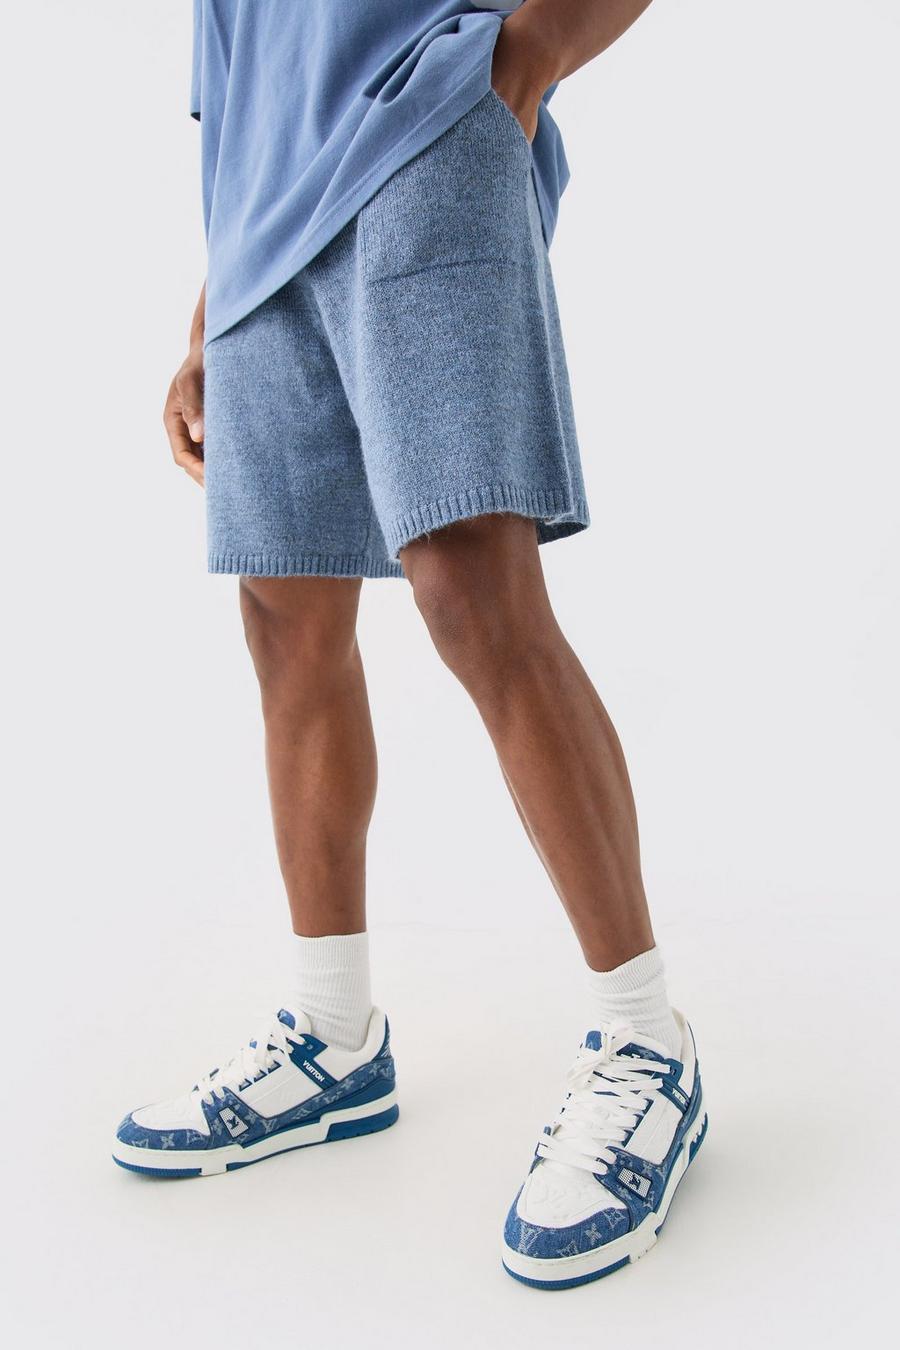 Lockere Strick-Shorts in Hellblau, Light blue